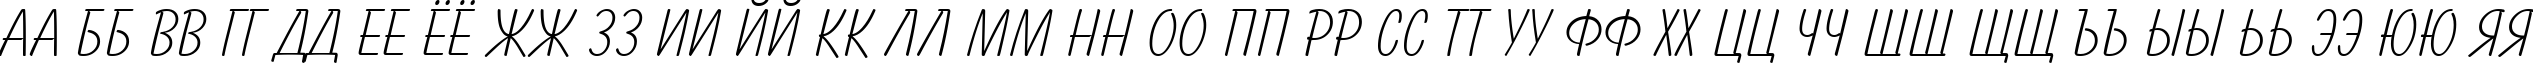 Пример написания русского алфавита шрифтом Balloon Light TL